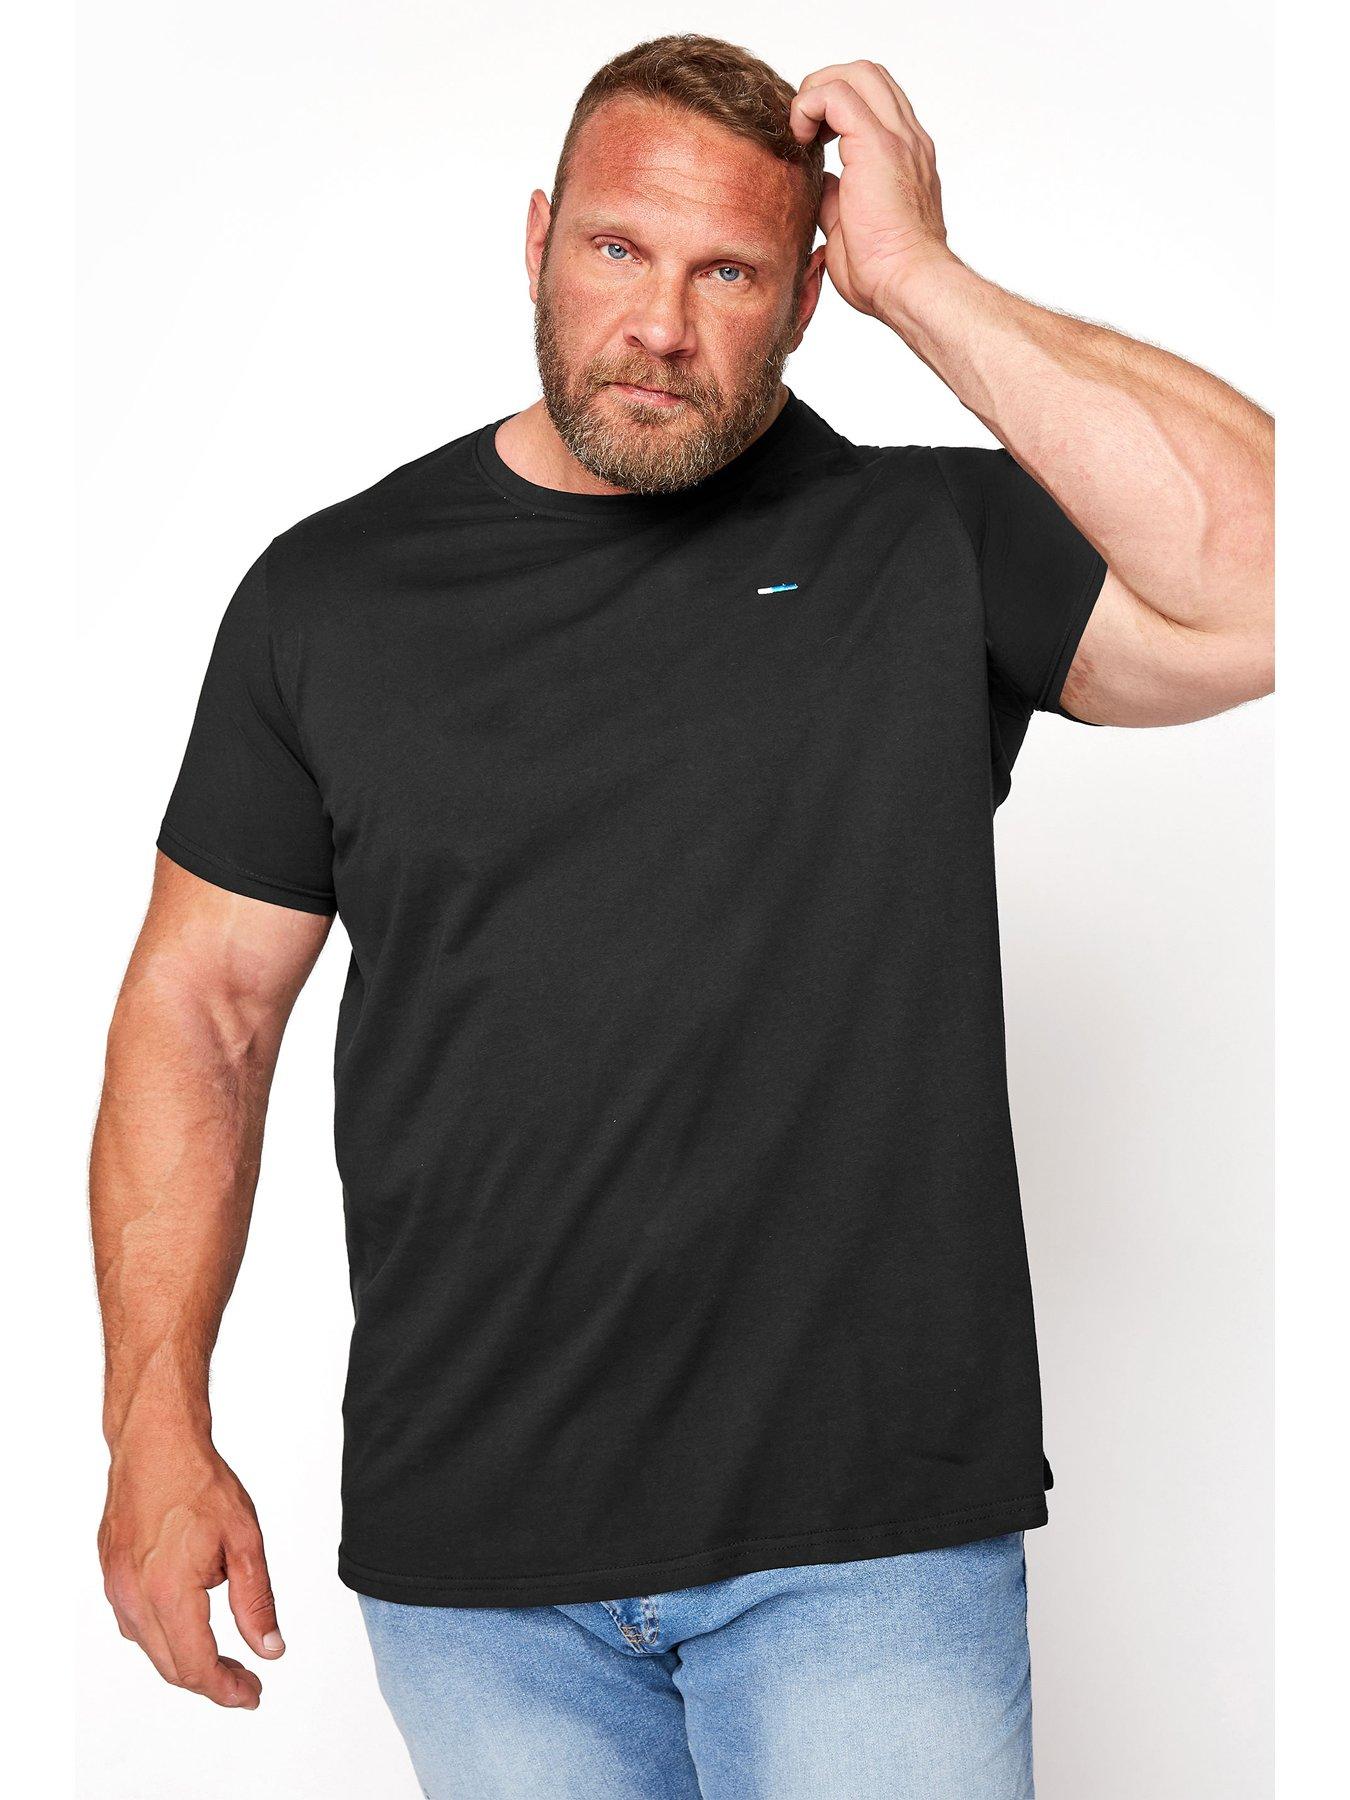 D555 Flyers Khaki Premium Weight T-Shirt - Big & Tall - Size 3XL - Men's